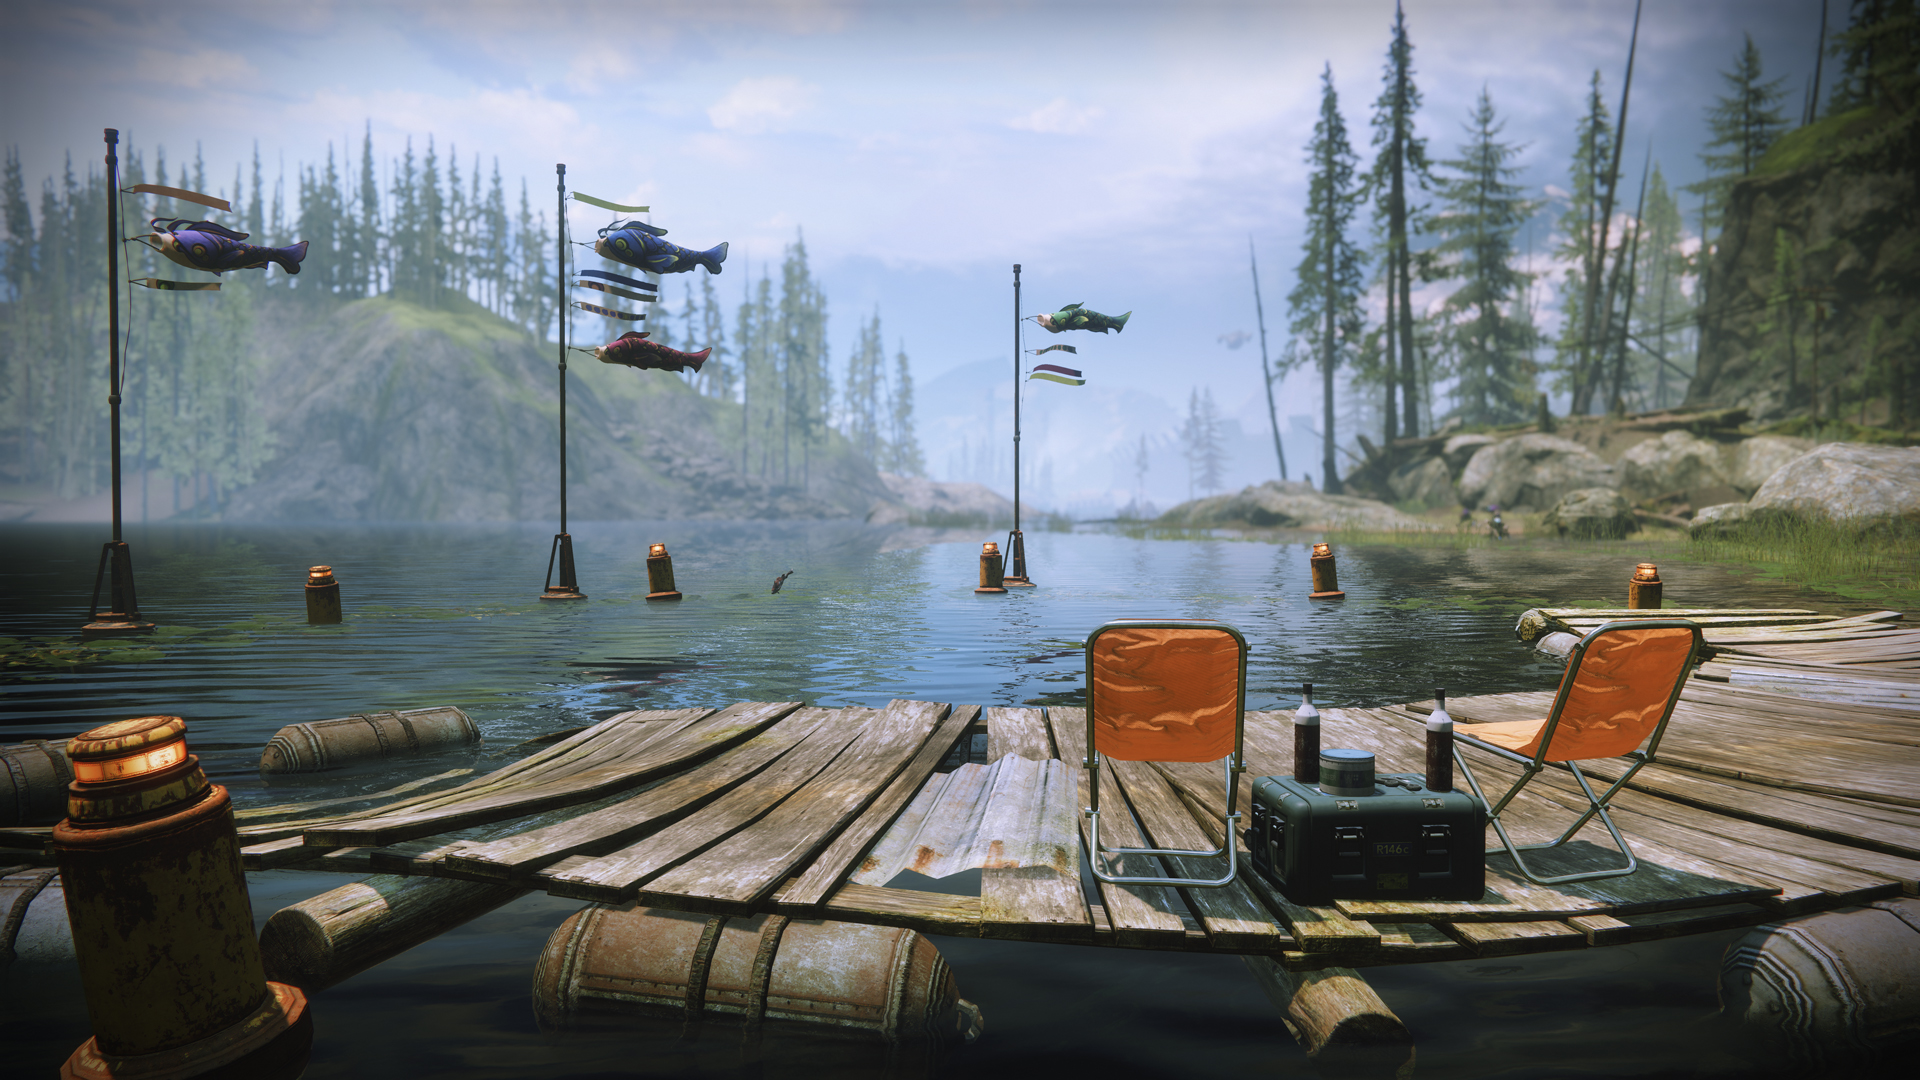 Destiny 2 fishing explained: Exotics, focused fishing, and more